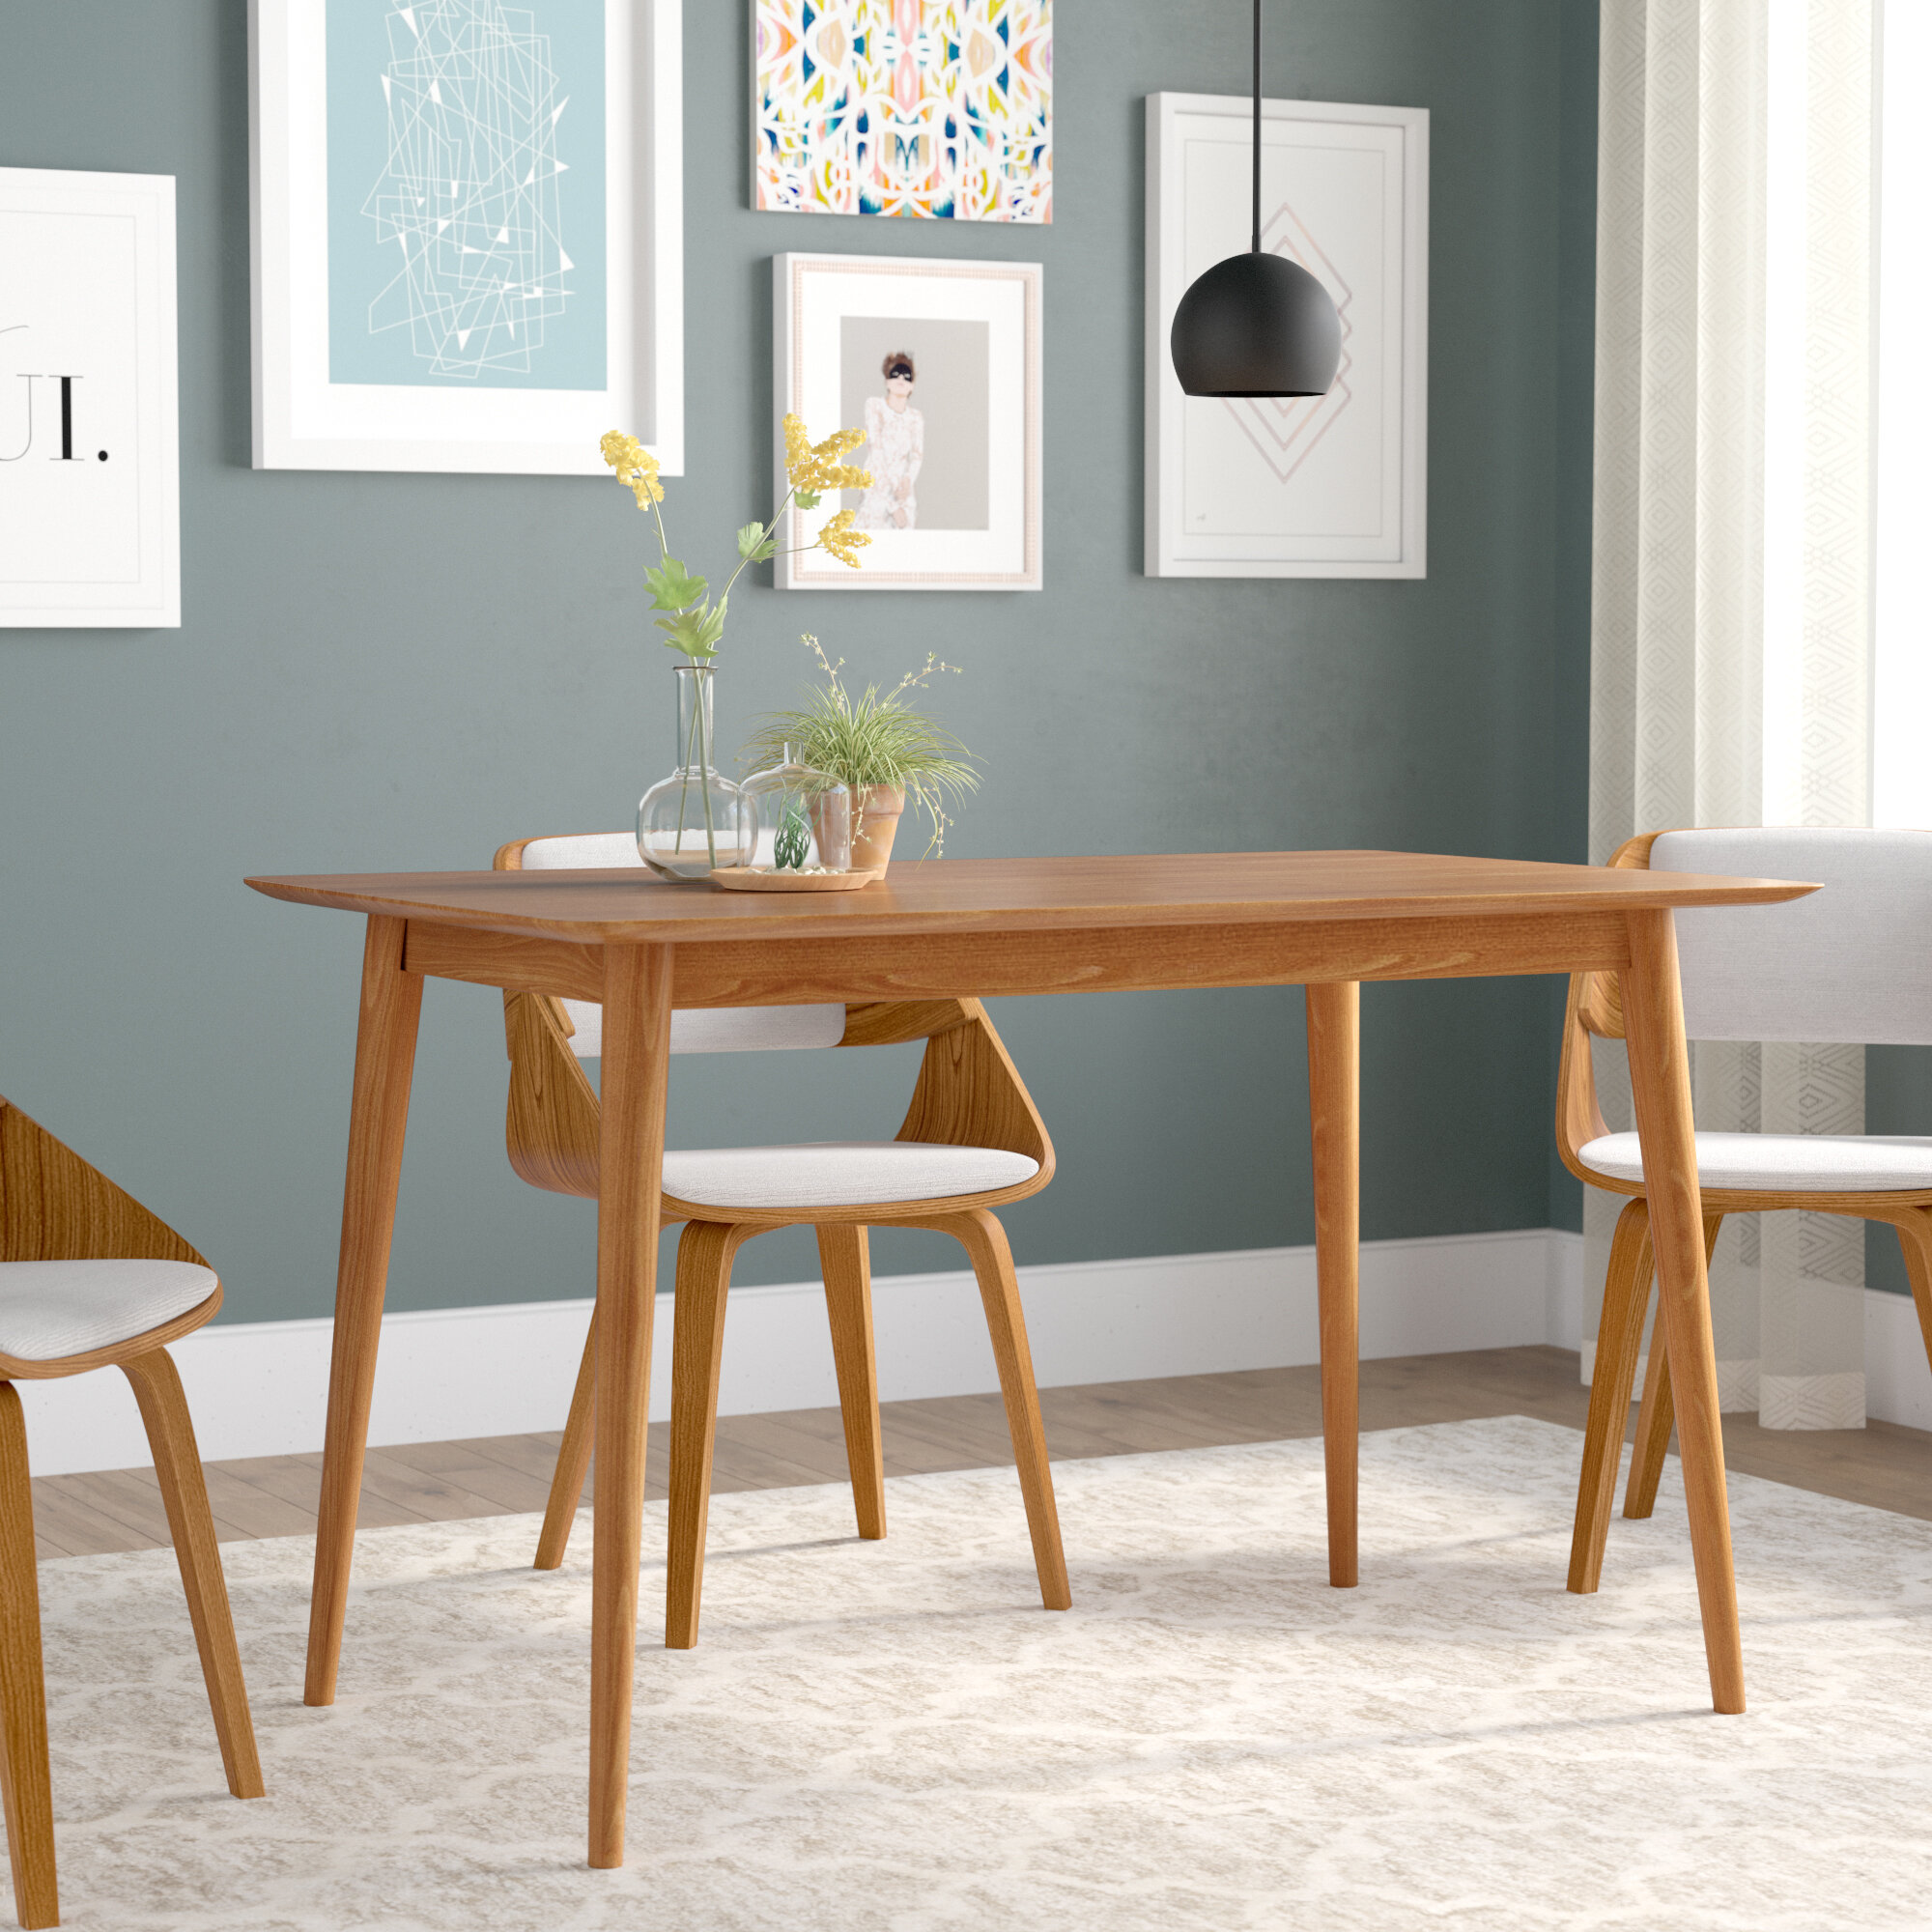 Brayden Studio Goodyear Mid Century Modern Solid Wood Dining Table Reviews Wayfair Co Uk